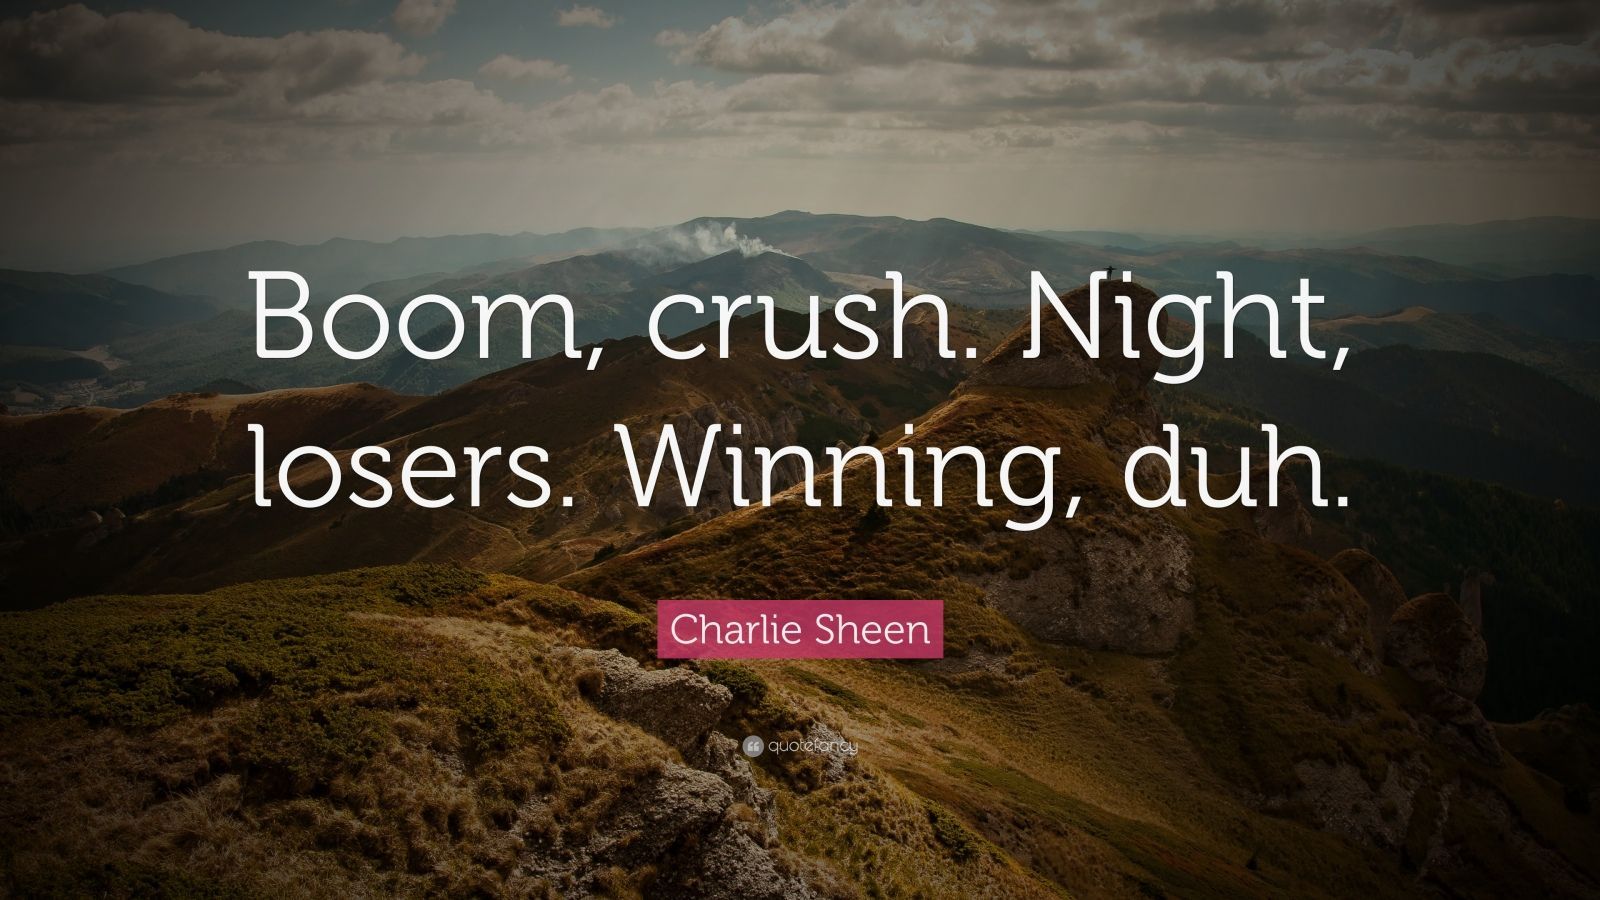 Charlie Sheen Quote: “Boom, crush. Night, losers. Winning, duh.” (9 wallpaper)